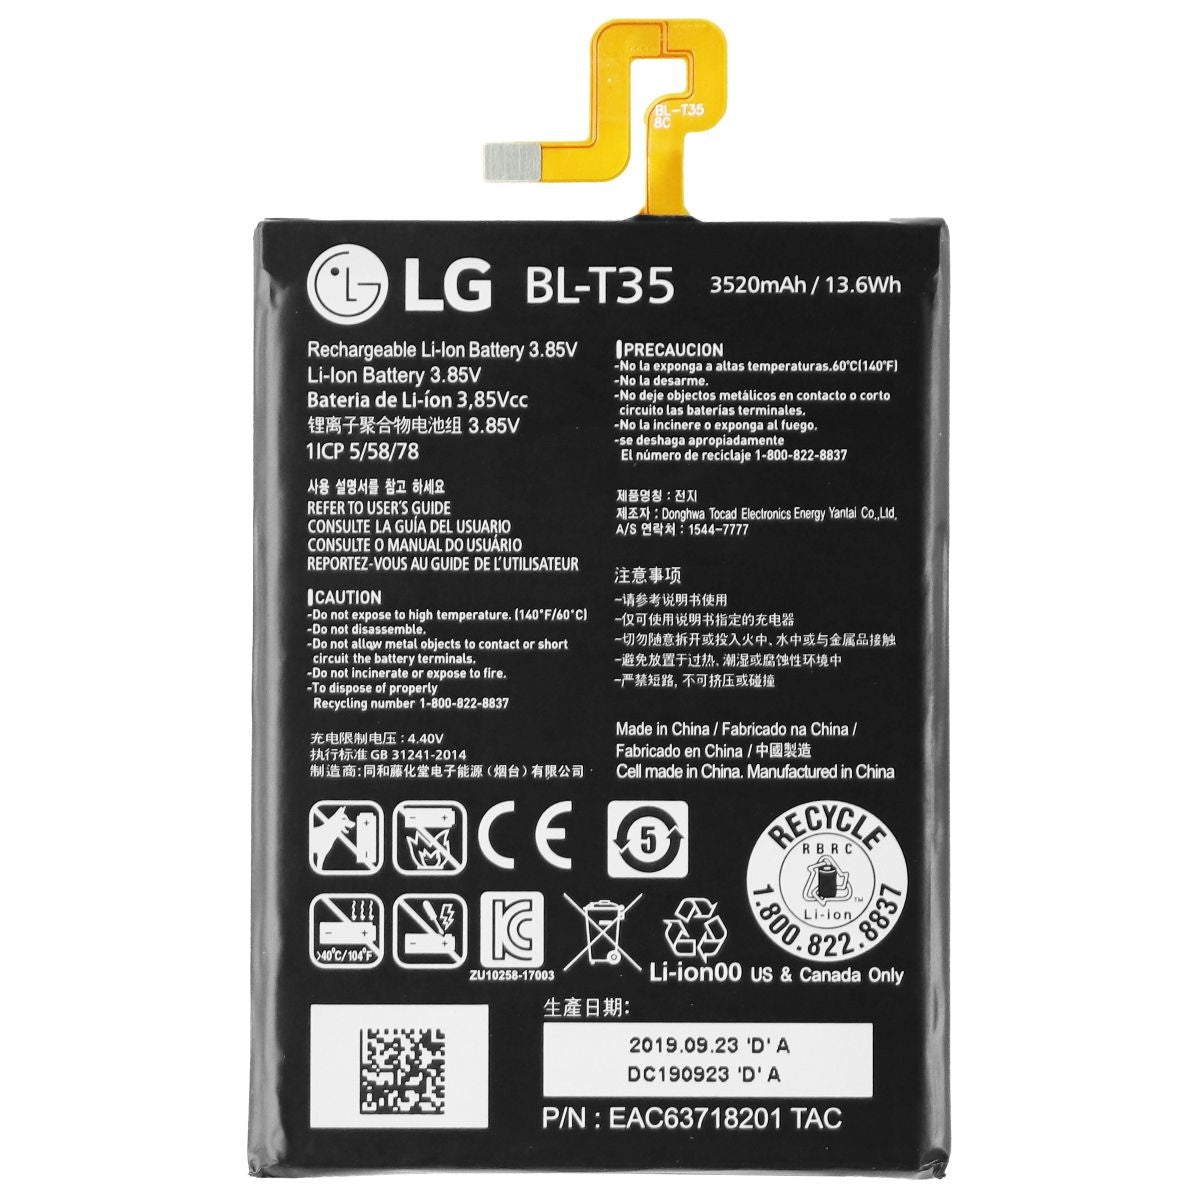 LG 3.85V Rechargeable 3,520mAh Li-ion Battery - Black (BL-T35) OEM